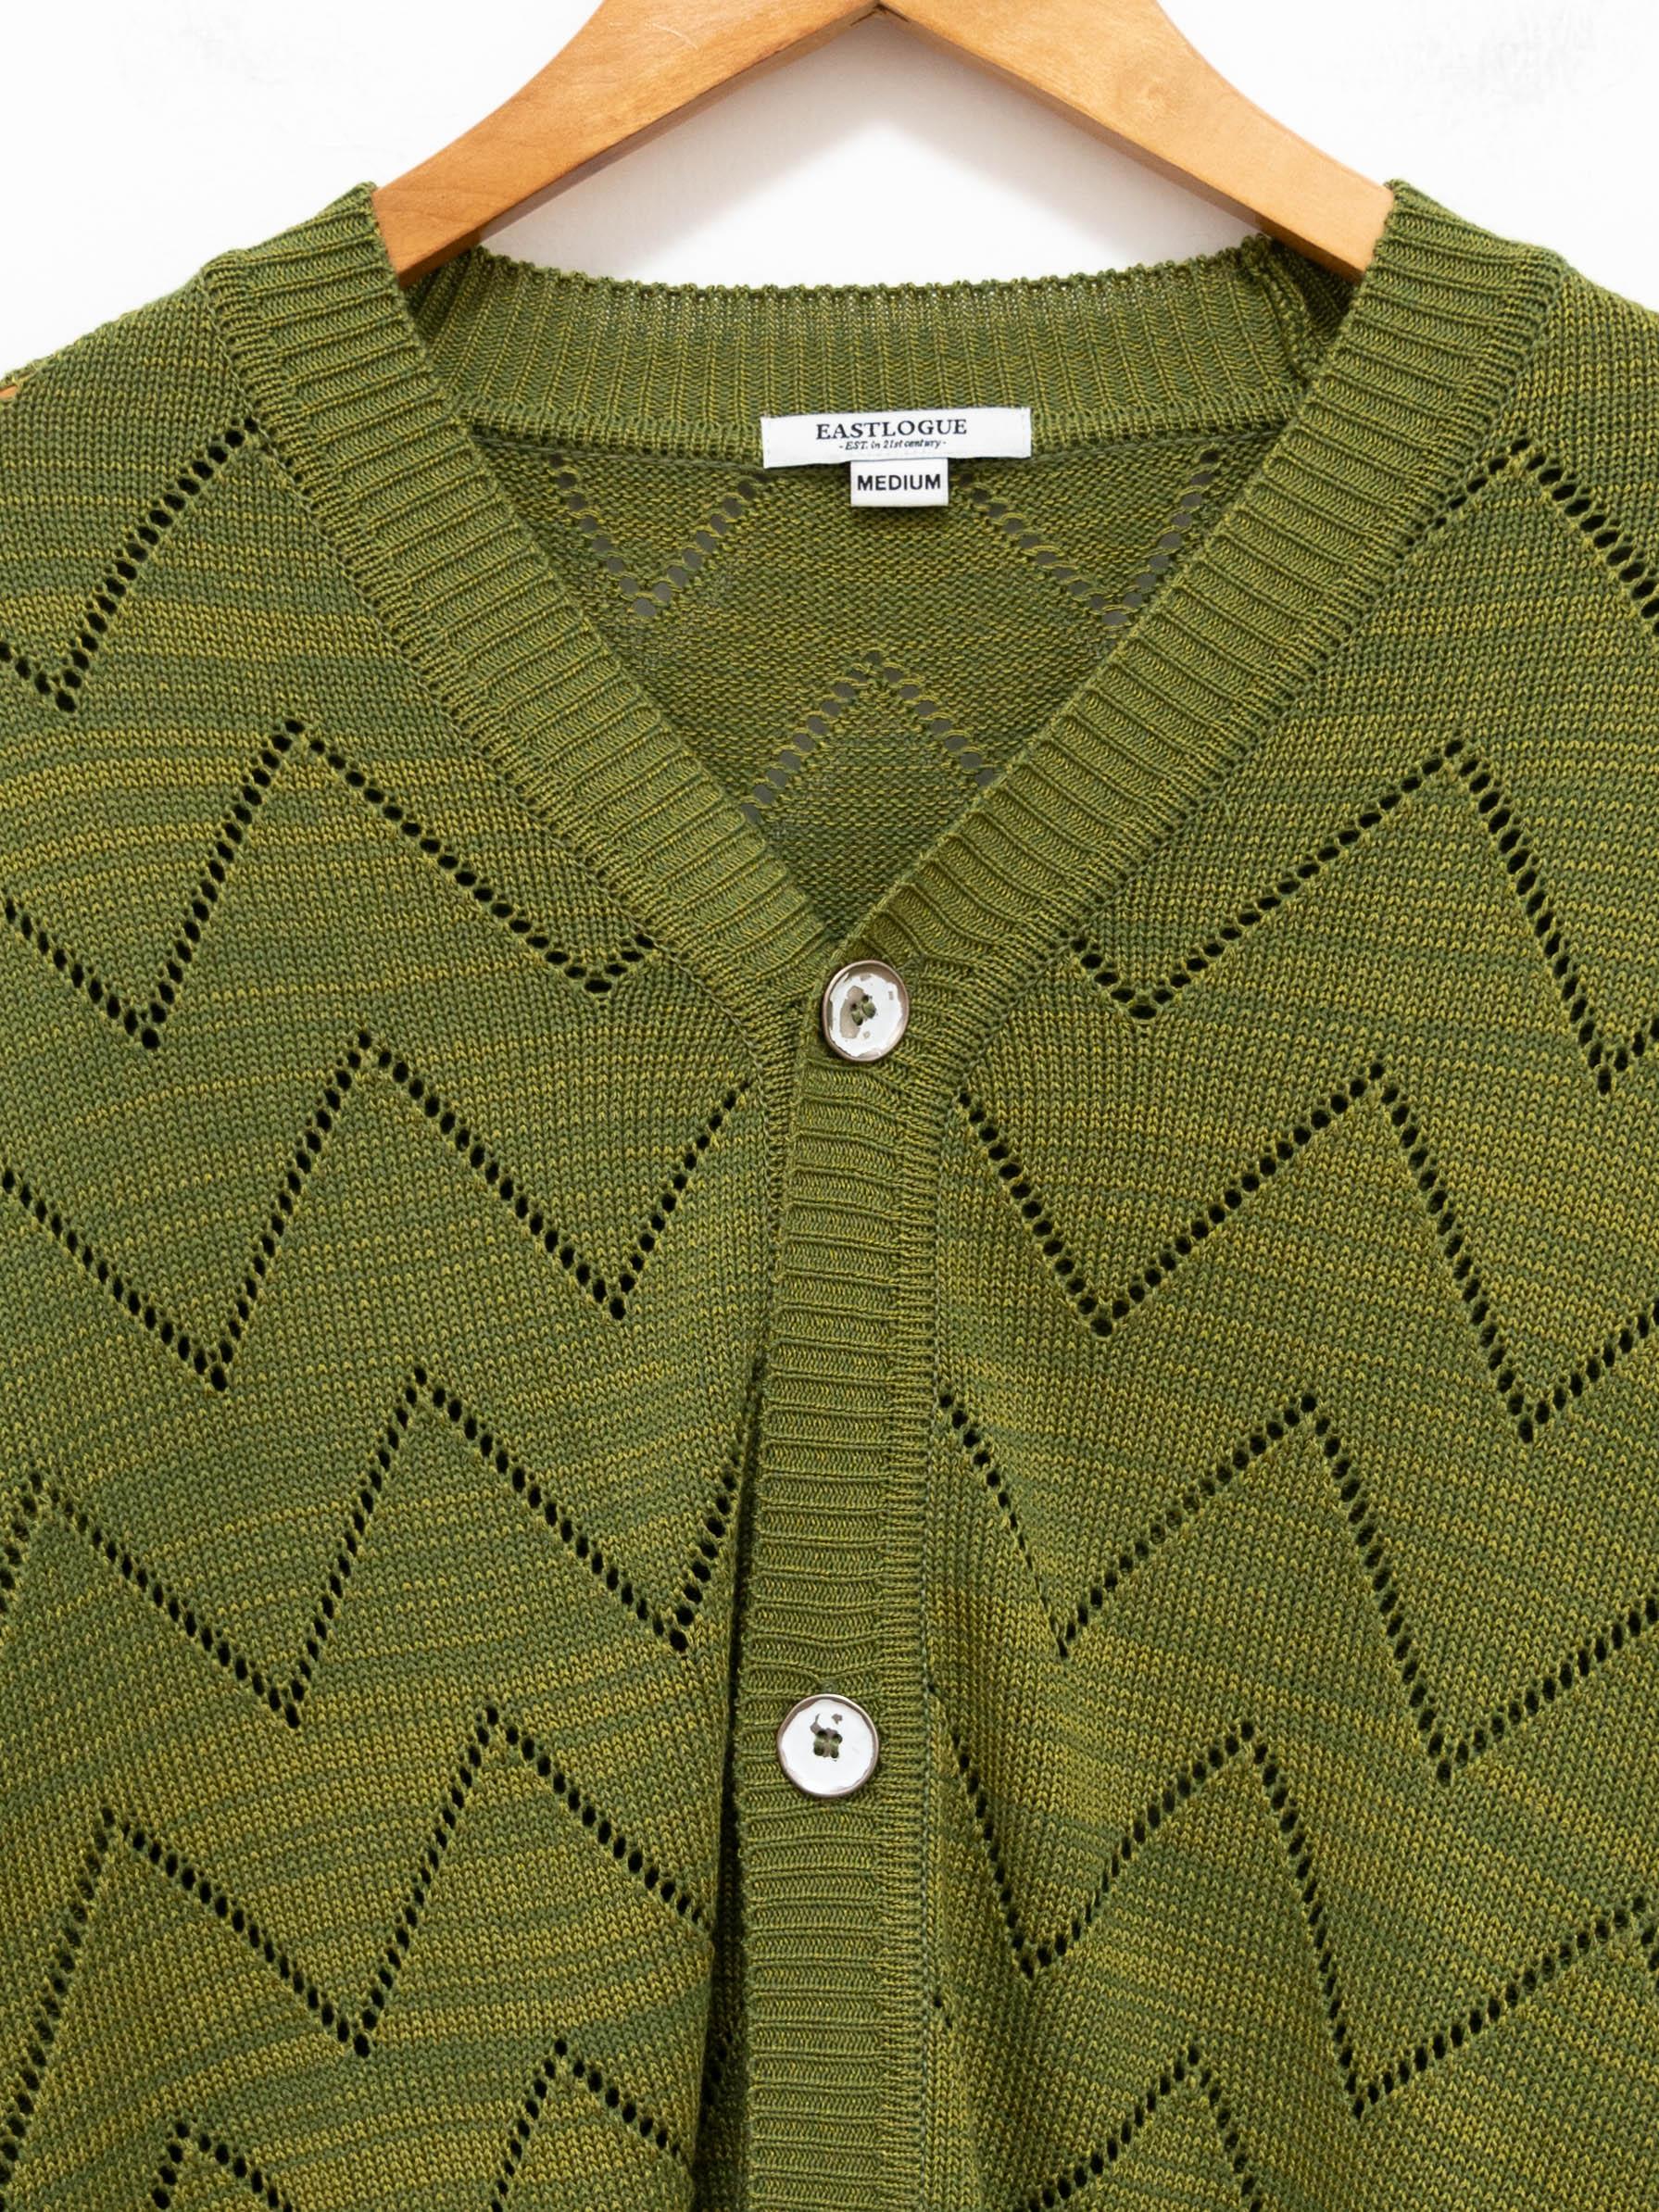 Namu Shop - Eastlogue Comb Pattern Cardigan - Green